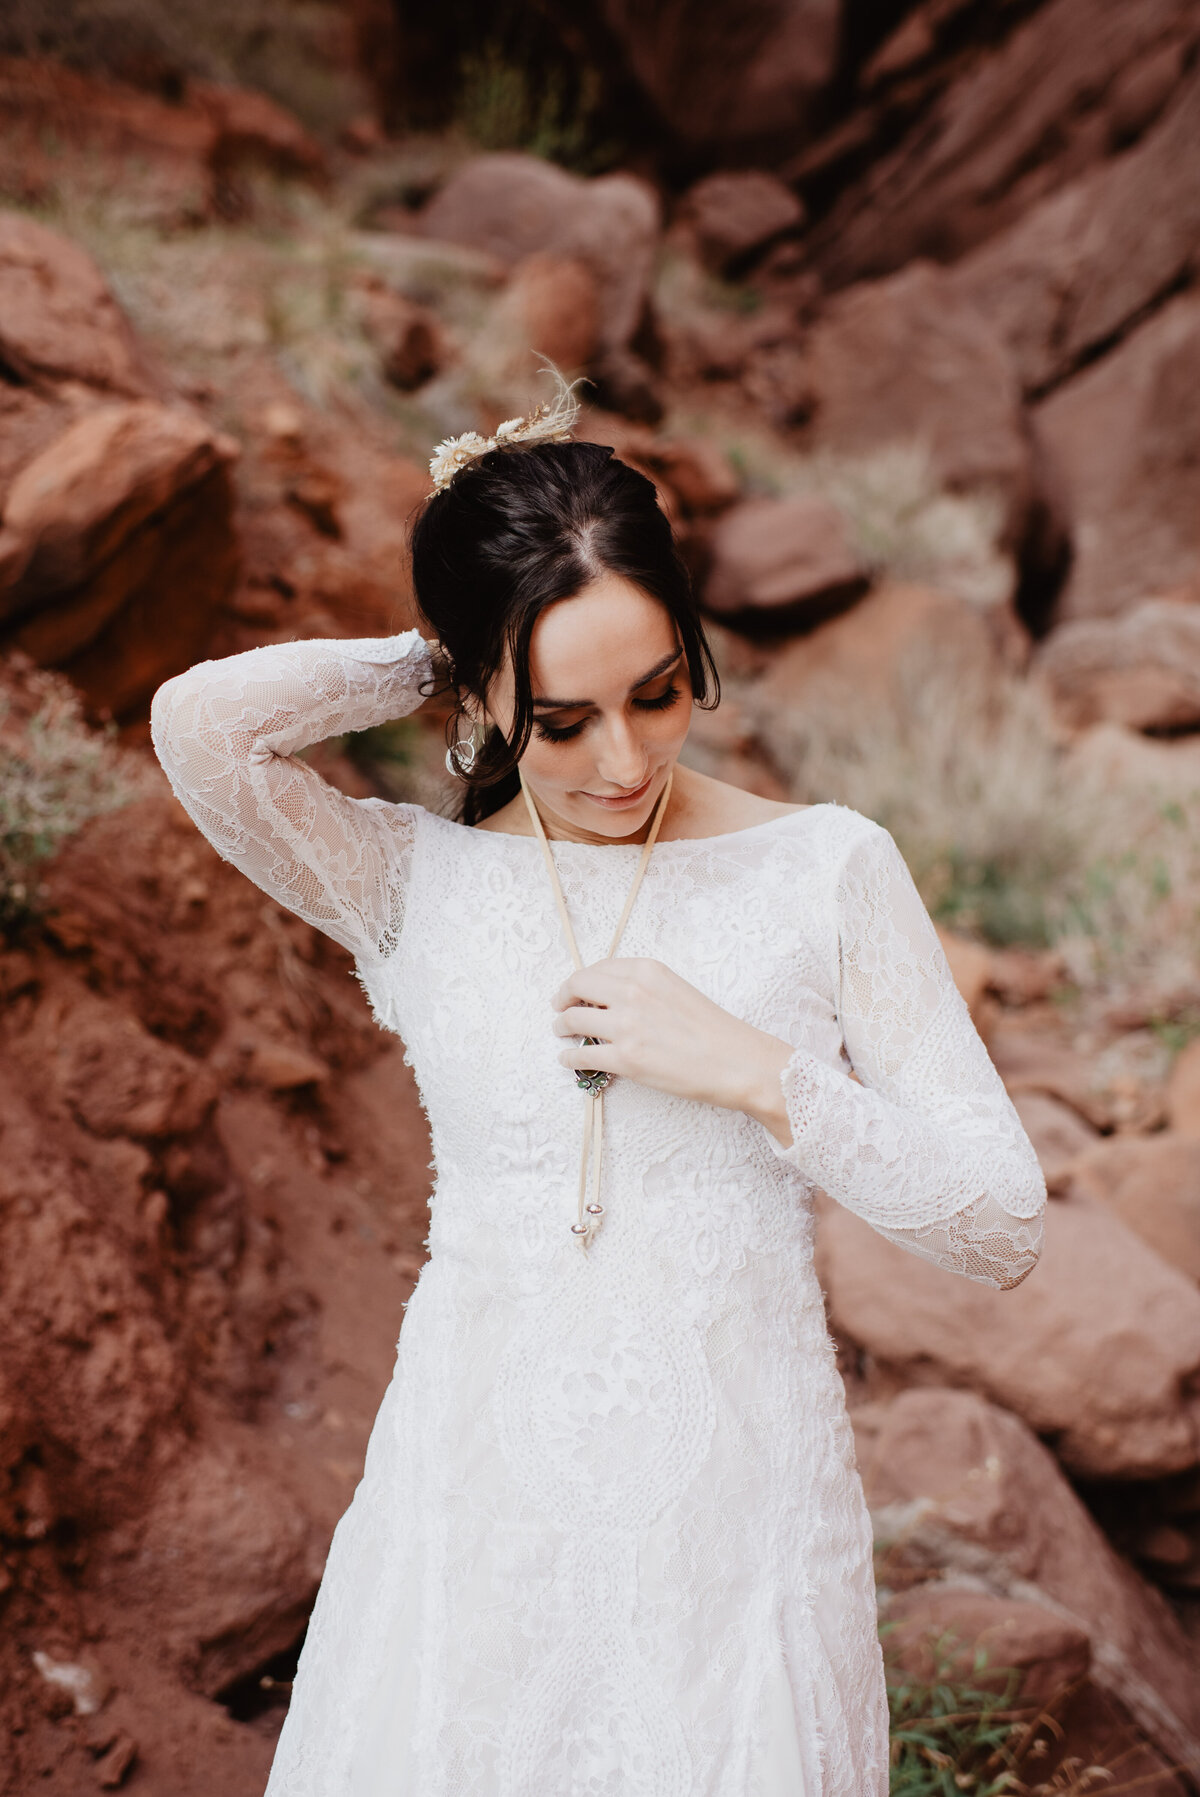 Utah Elopement Photographer captures bride putting on necklace